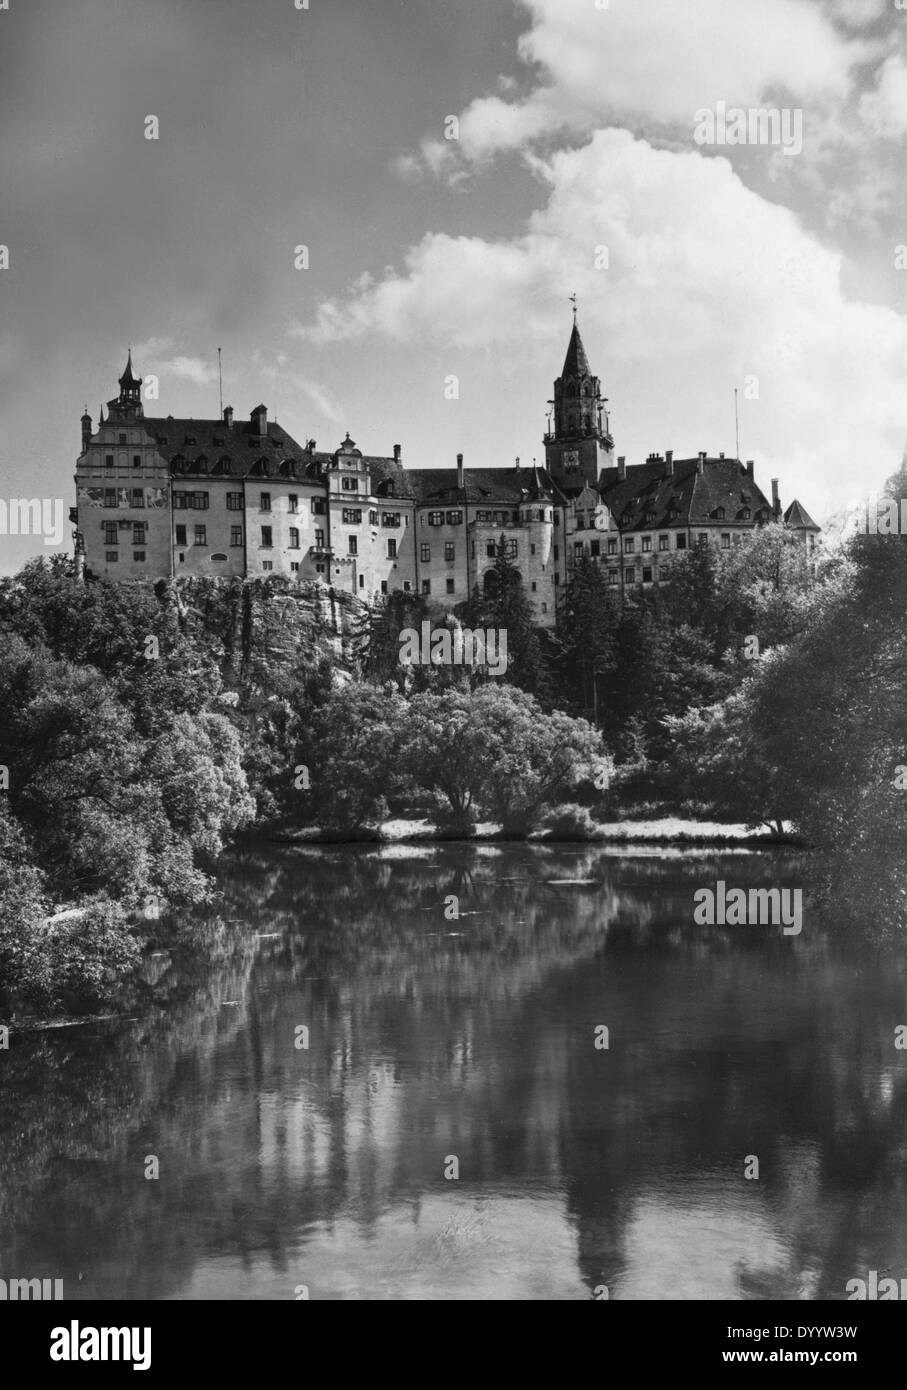 Image result for sigmaringen castle, 1944 - 1945 black and white photo